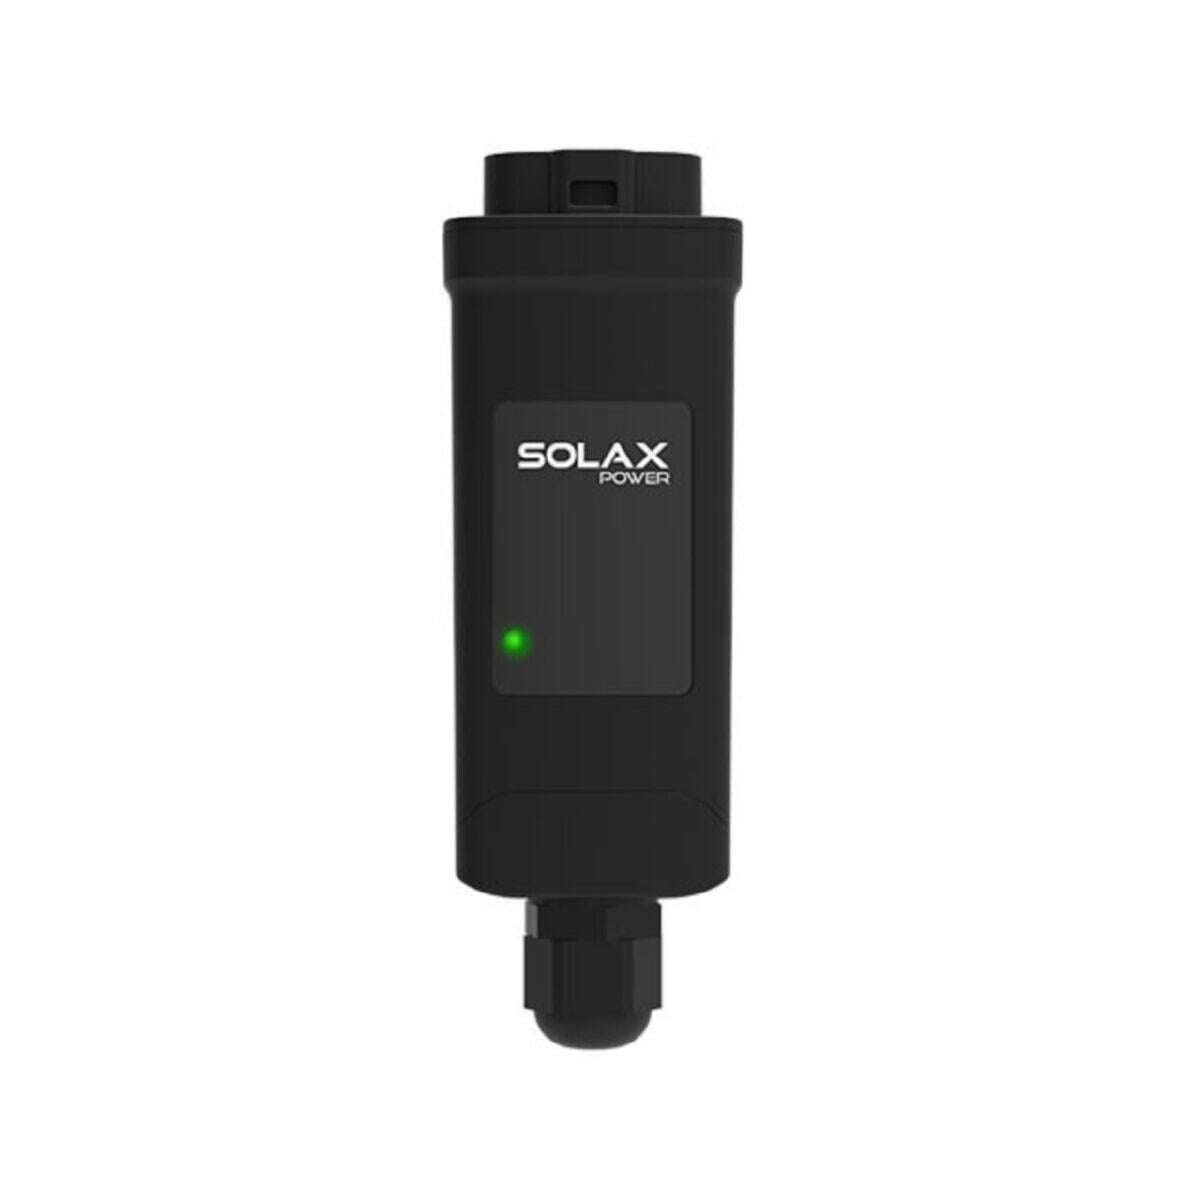 Solax Power POCKET LAN INTERFACE V3.0